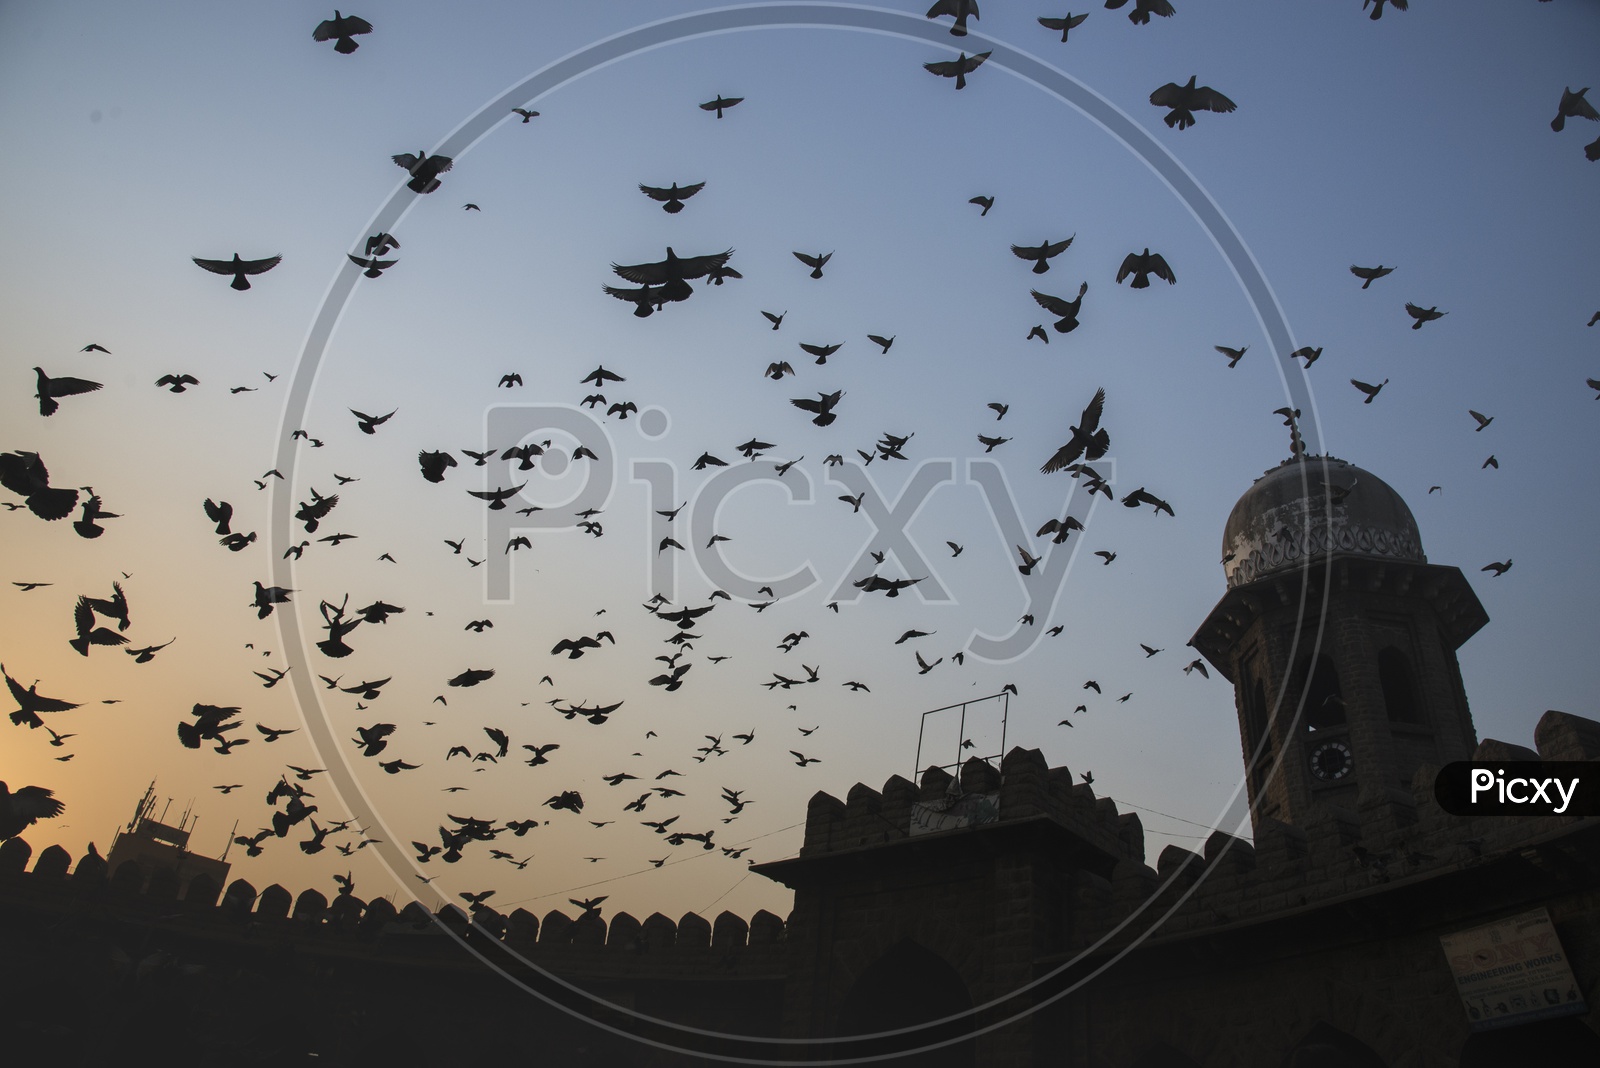 Birds flying, Mozamjahi Market